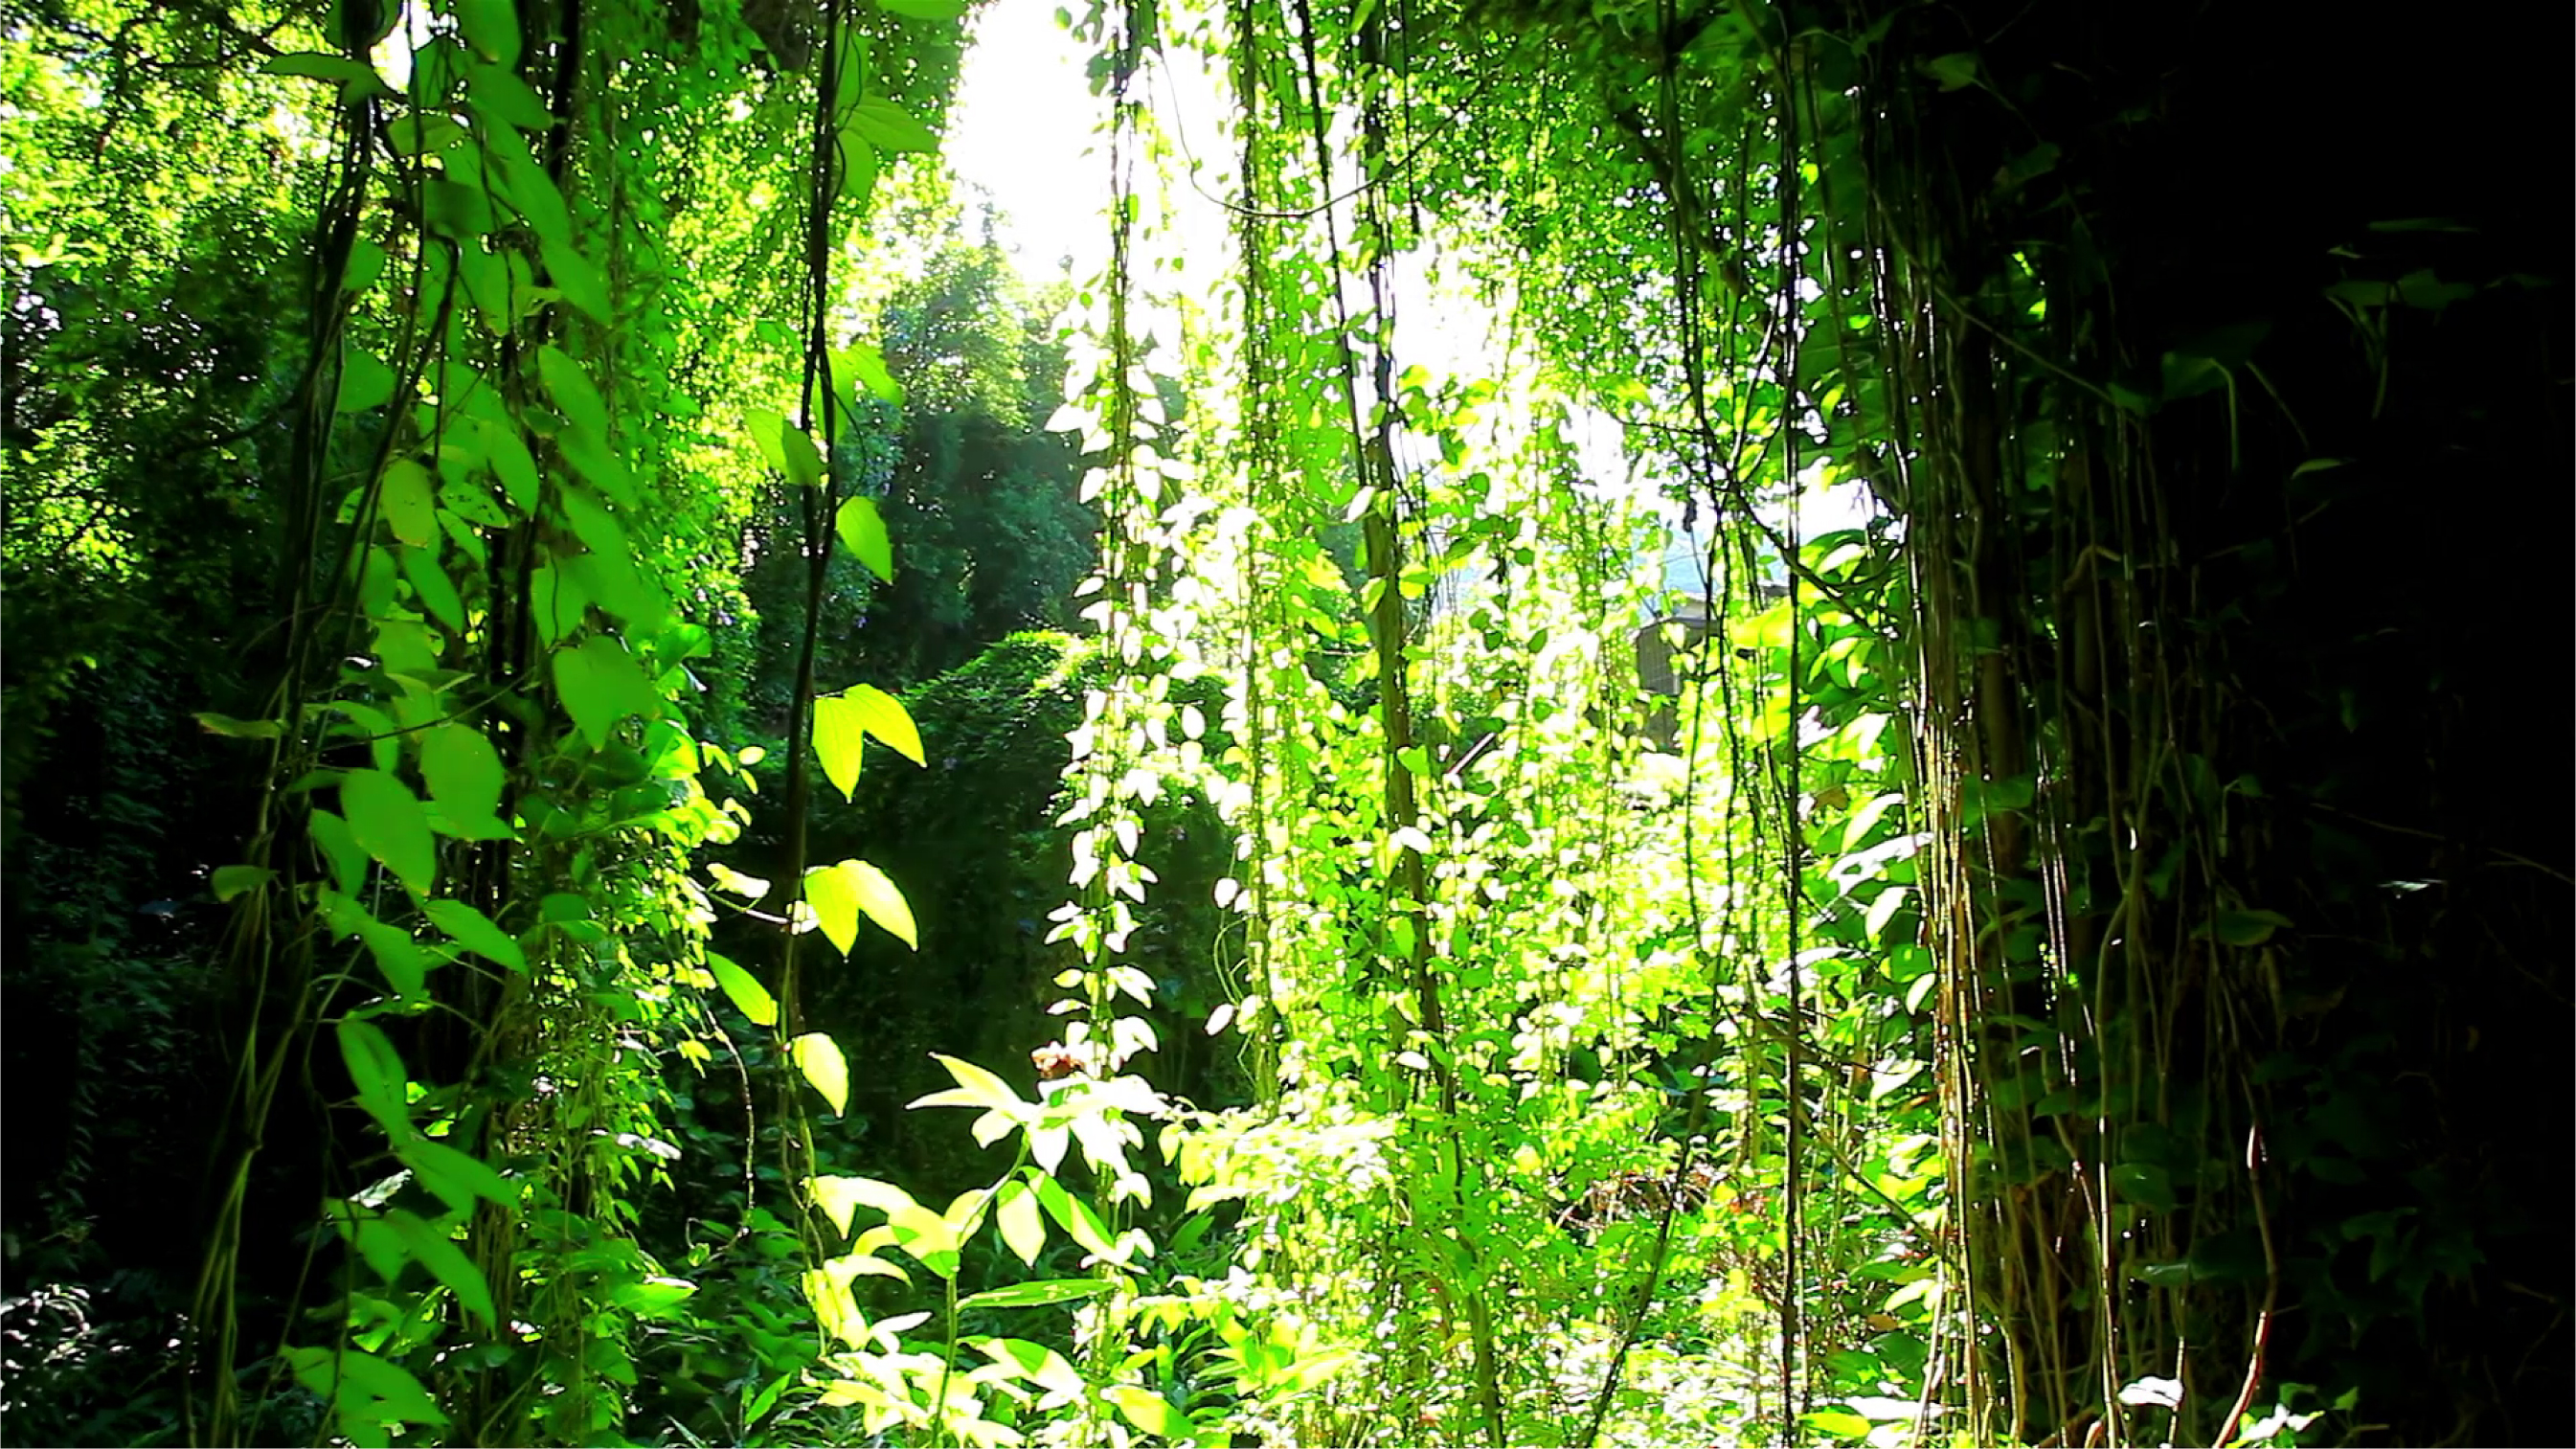 Clariant_Image_Amazon forest v2_2021_EN